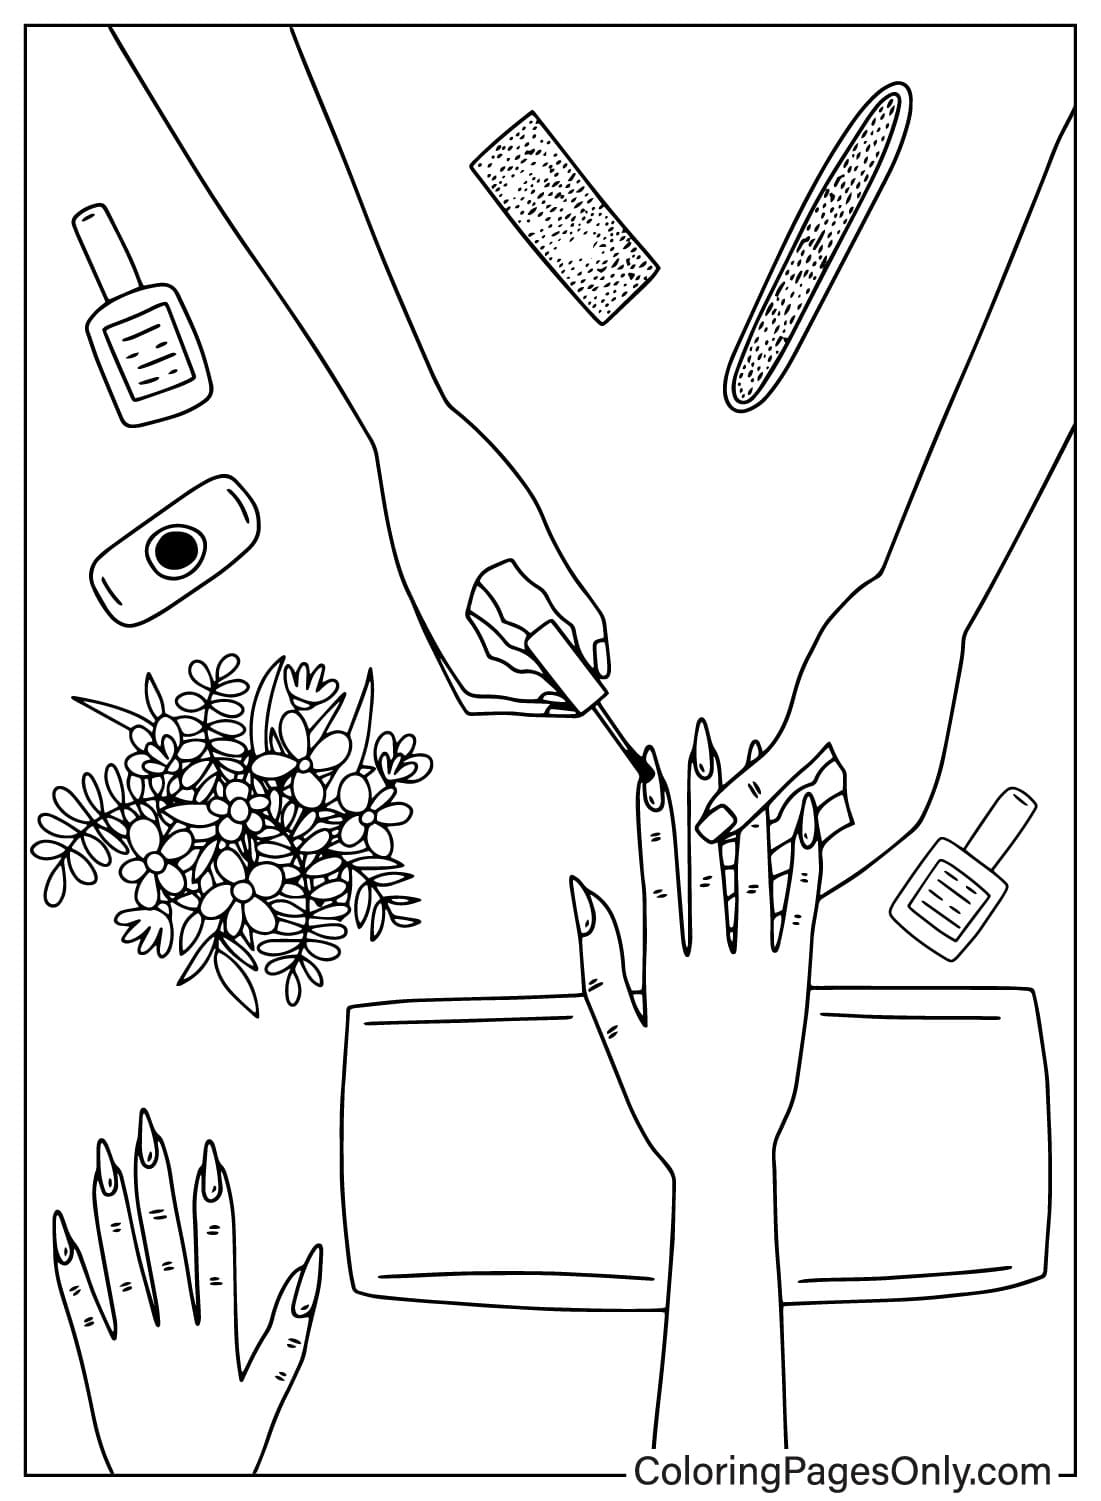 Página para colorear para adultos de Nail Art de Nails